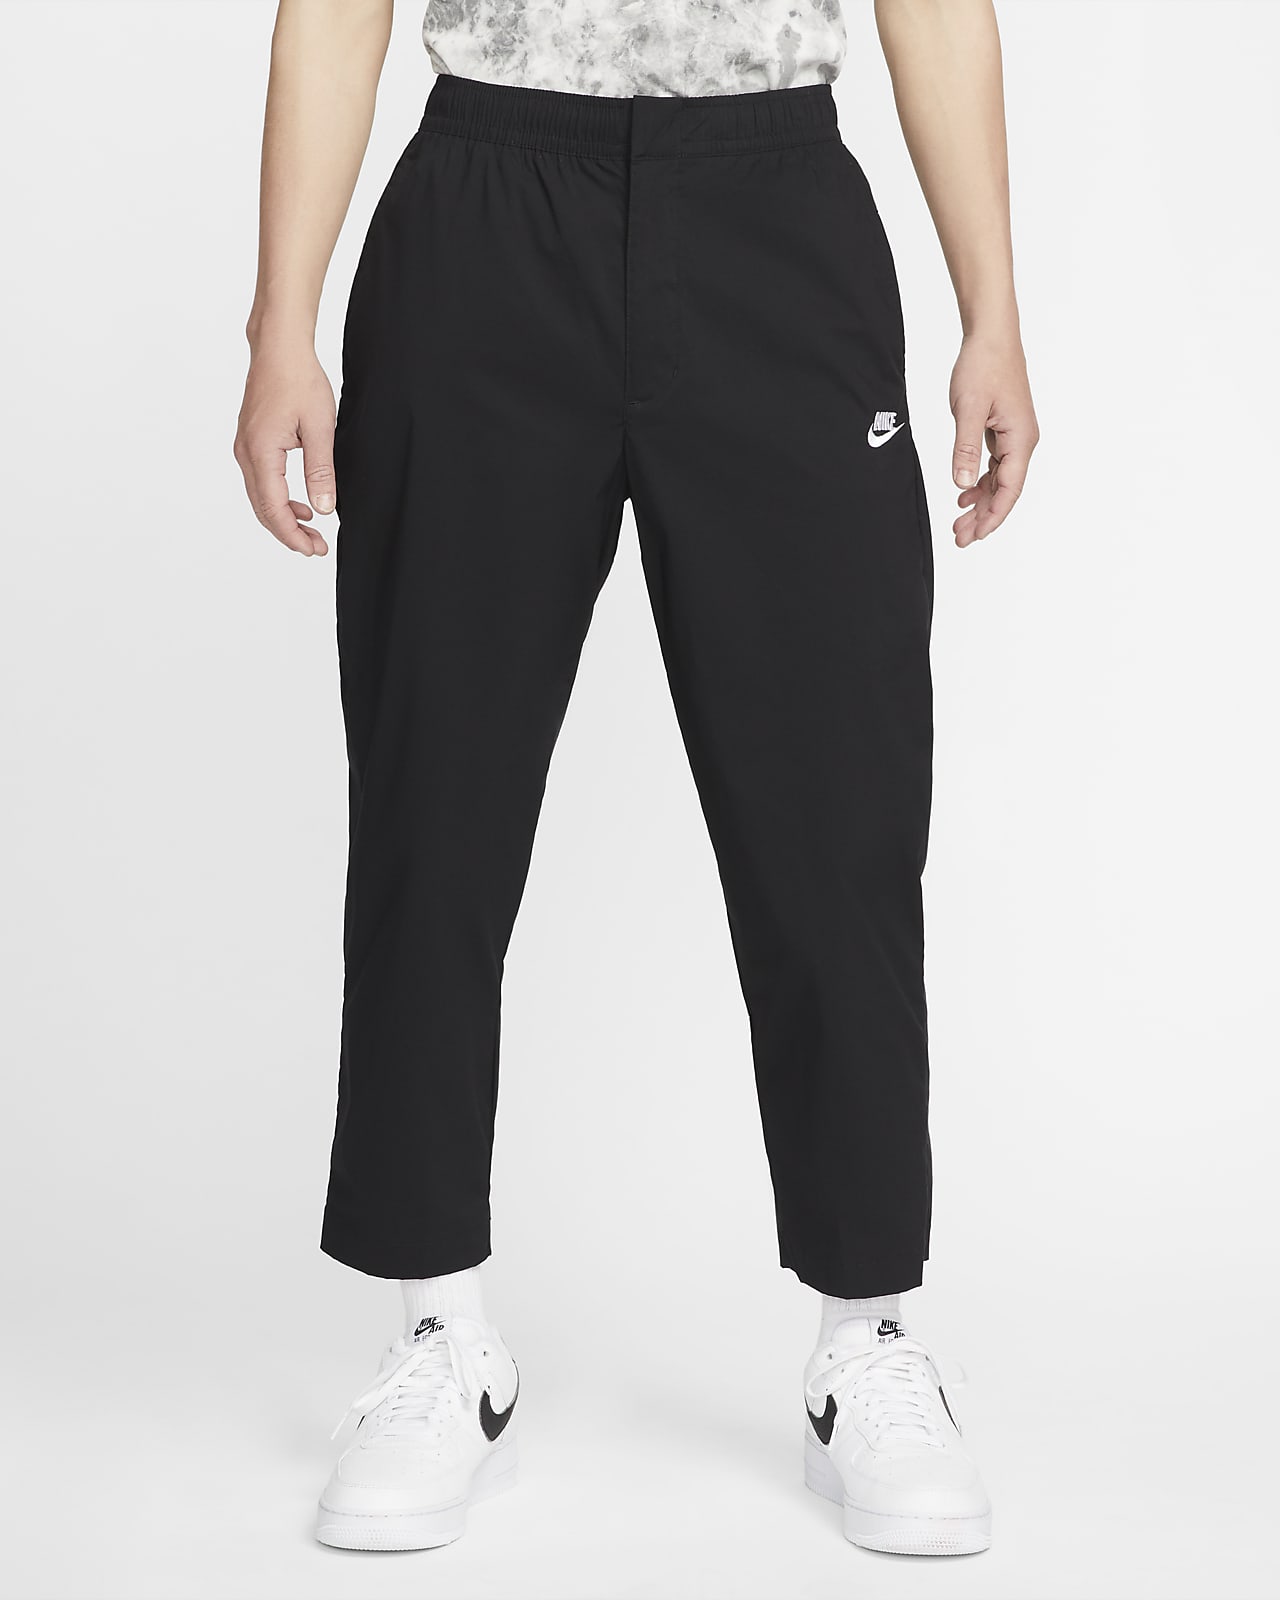 Nike Sportswear Sport Essentials 男款梭織無內裡運動長褲